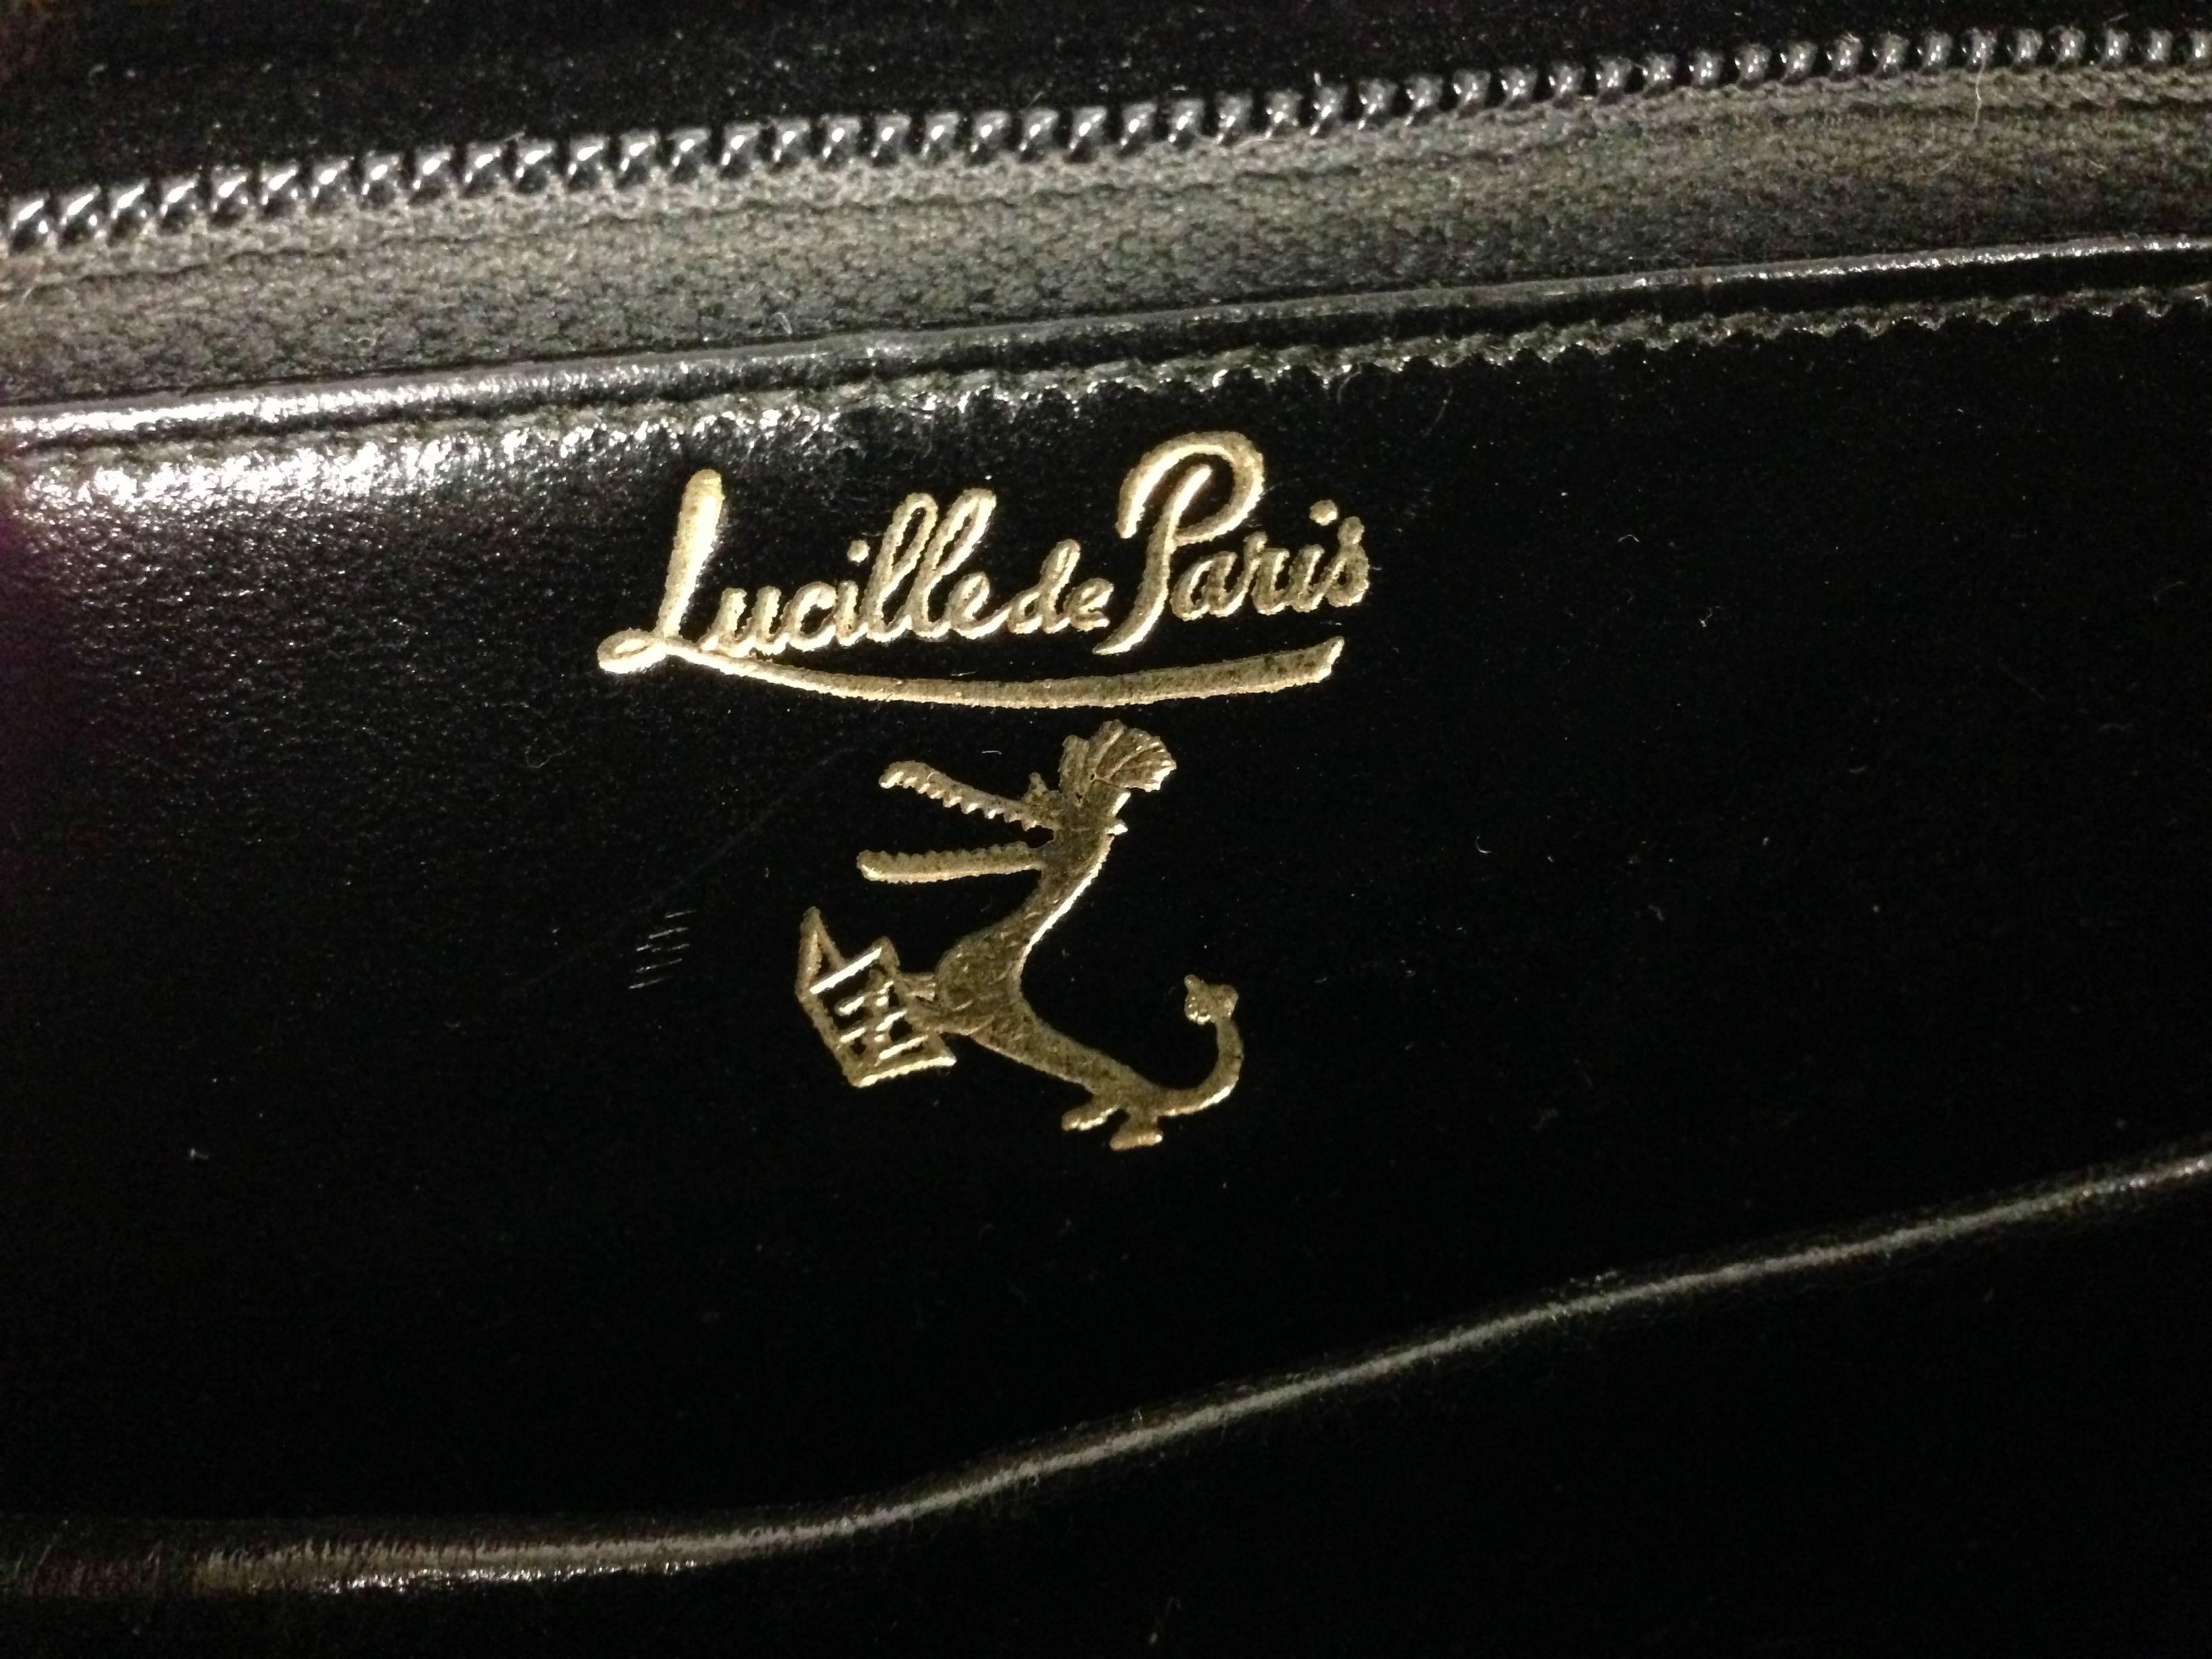 Lucille de Paris Alligator Handbag with Gold Tone Metal Hardware In Excellent Condition For Sale In Houston, TX